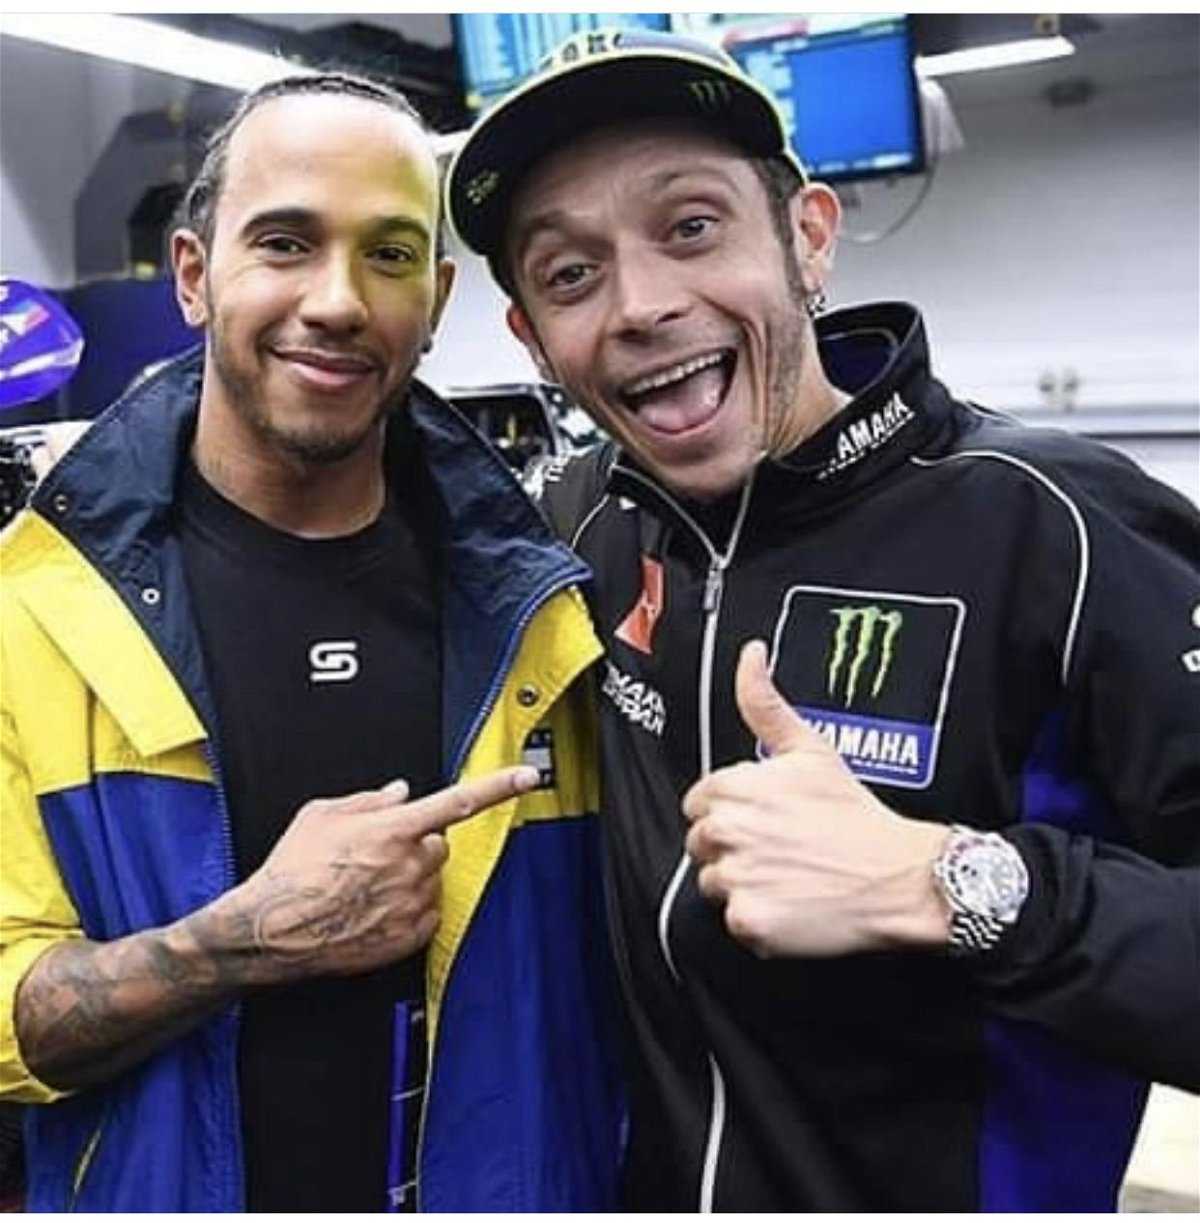 REGARDER: La légende du MotoGP Valentino Rossi refuse hilarante l'invitation F1 de Lewis Hamilton